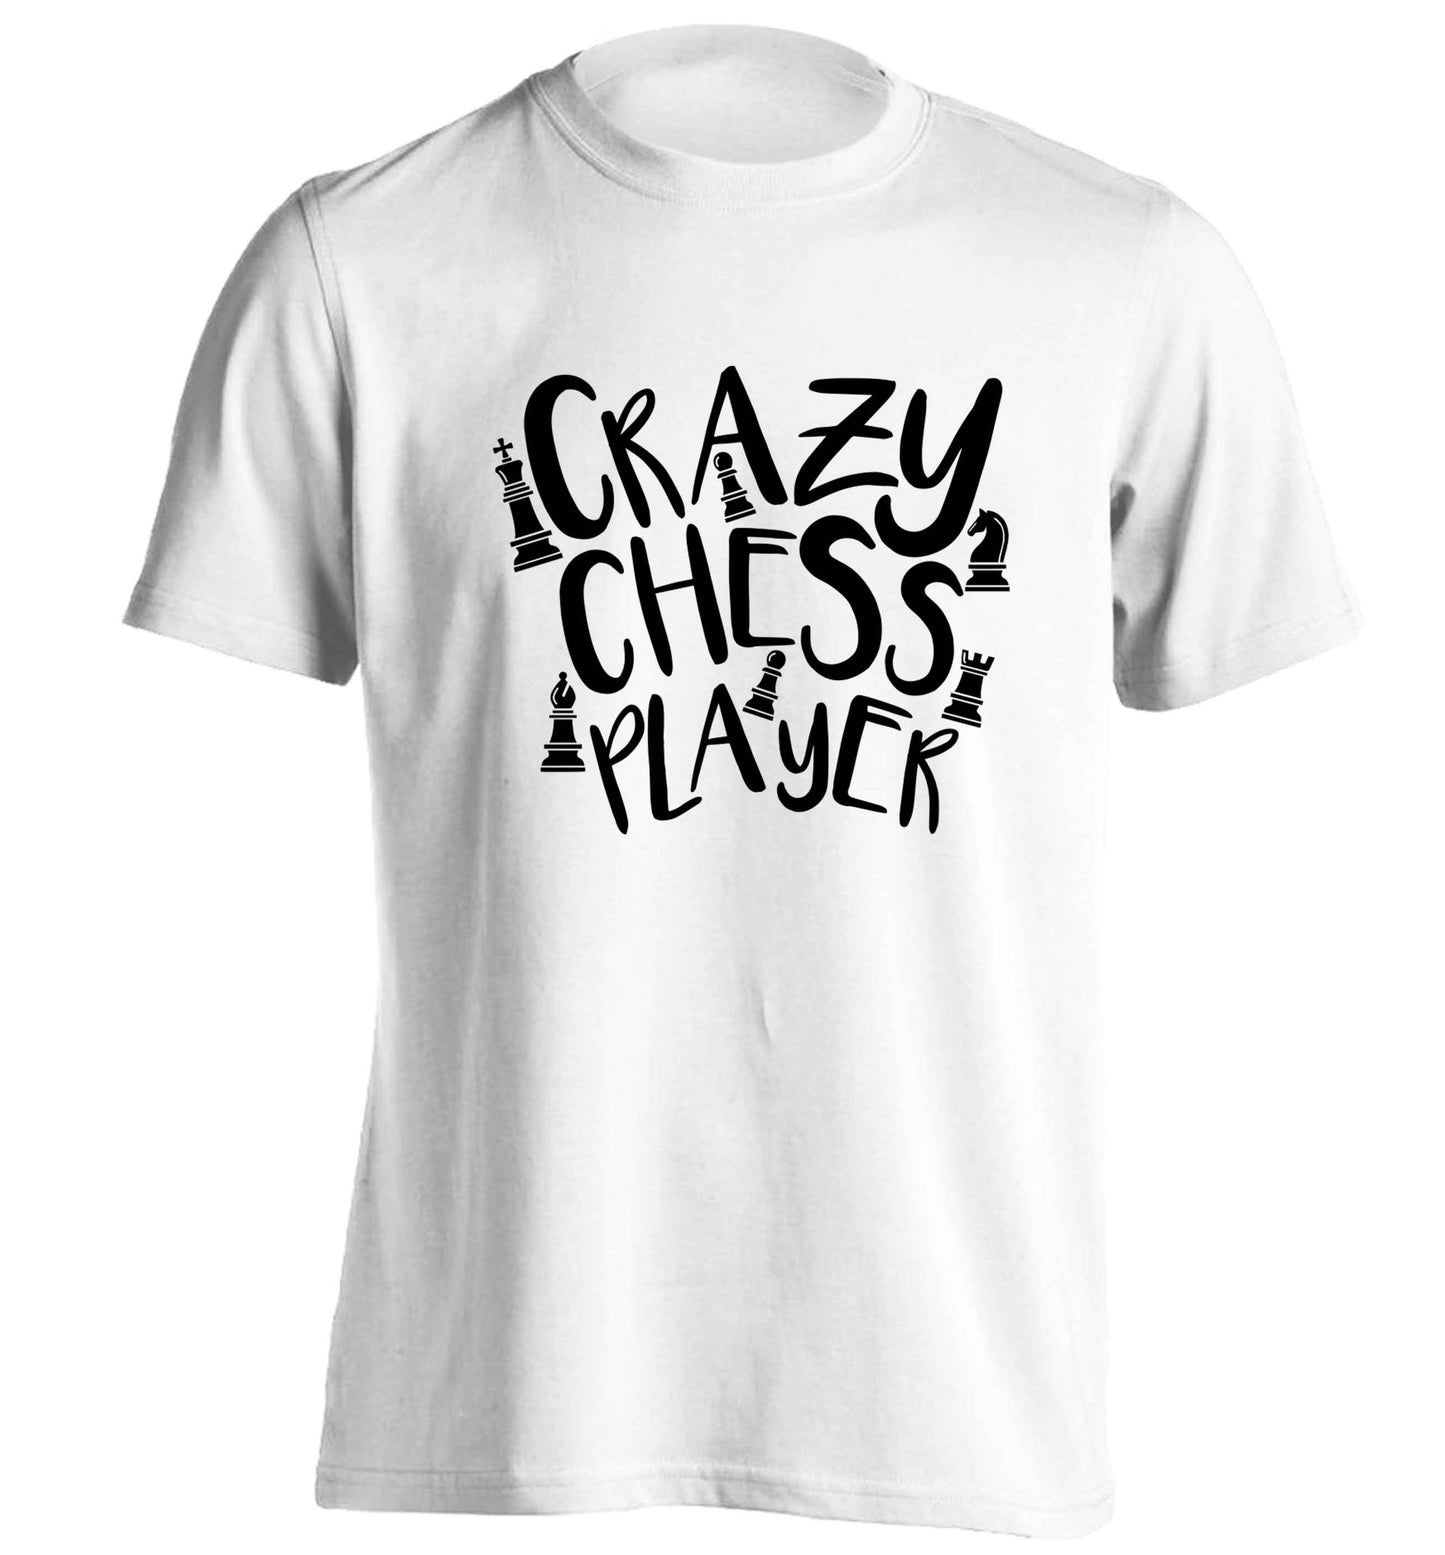 Crazy chess player adults unisex white Tshirt 2XL